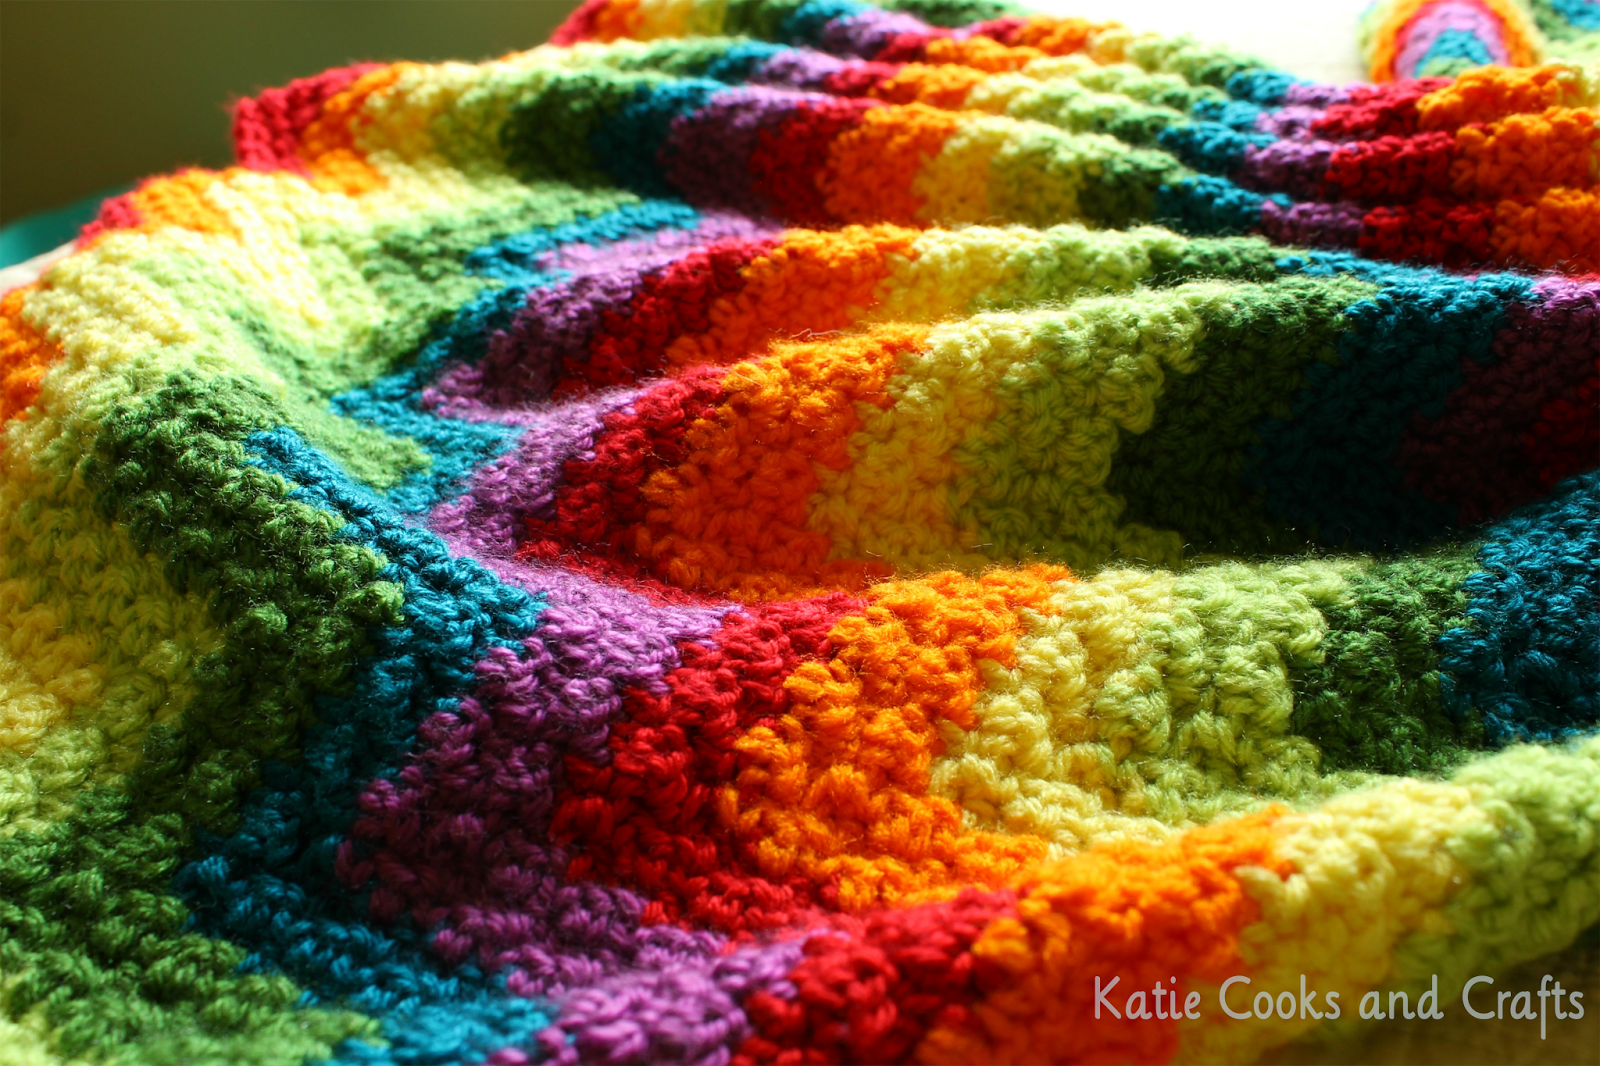 Katie Cooks and Crafts: Rumpled Ripple Rainbow Crochet ...